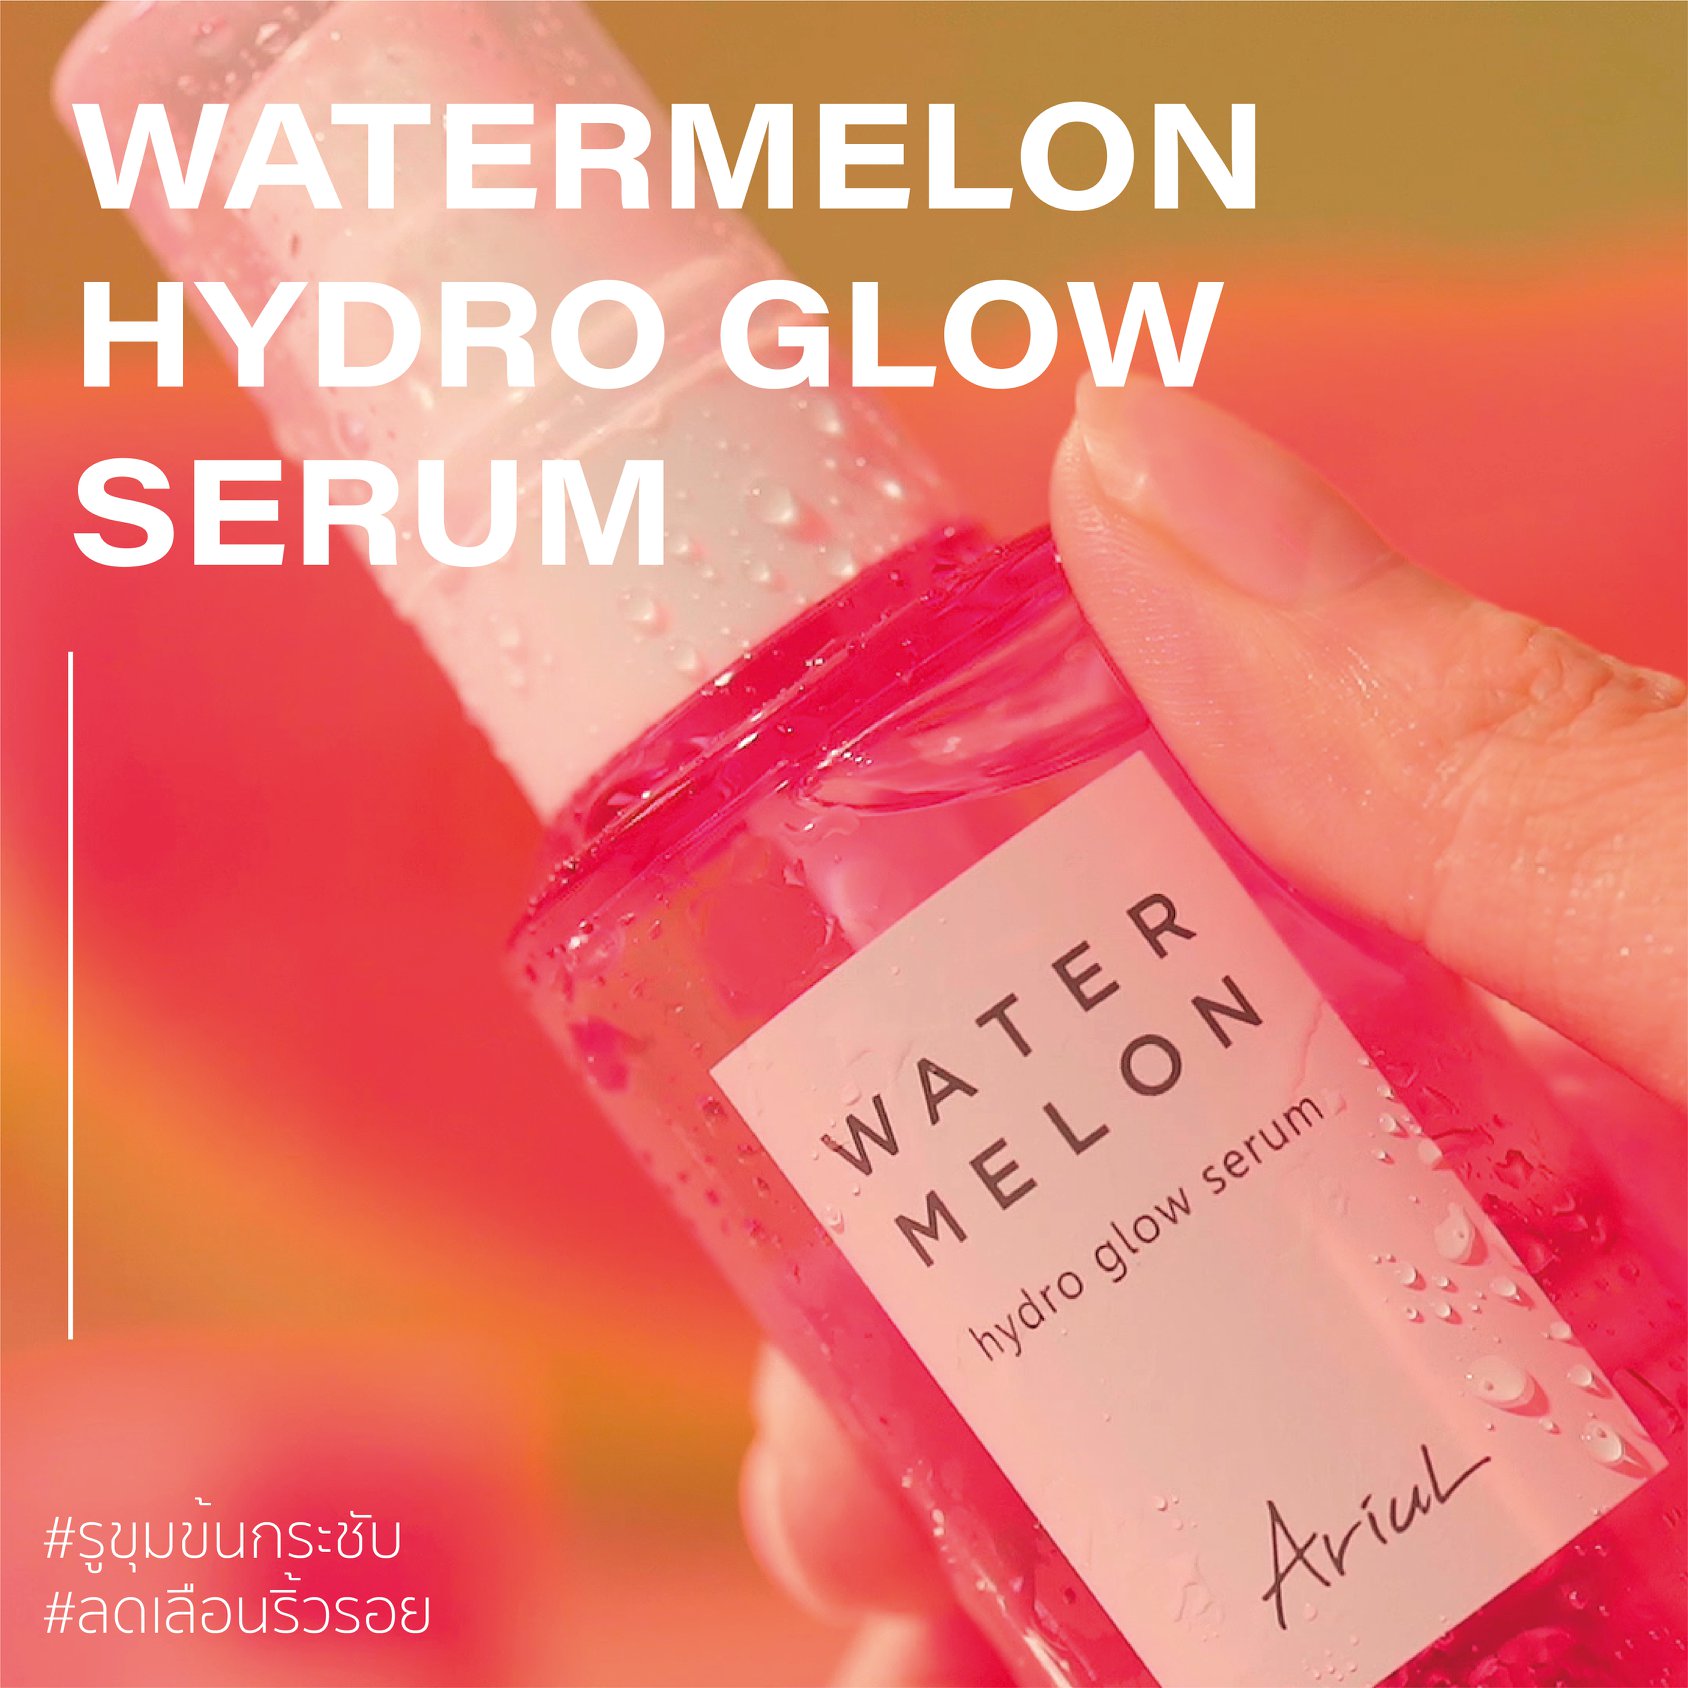 Ariul, Ariul Watermelon Hydro Glow Serum, Ariul Watermelon Hydro Glow Serum 55ml, Ariul Watermelon Hydro Glow Serum 55ml รีวิว, เซรั่ม, เซรั่มแตงโม, ผิวโกลวใส, ชุ่มชื้น, รูขุมขนกระชับ